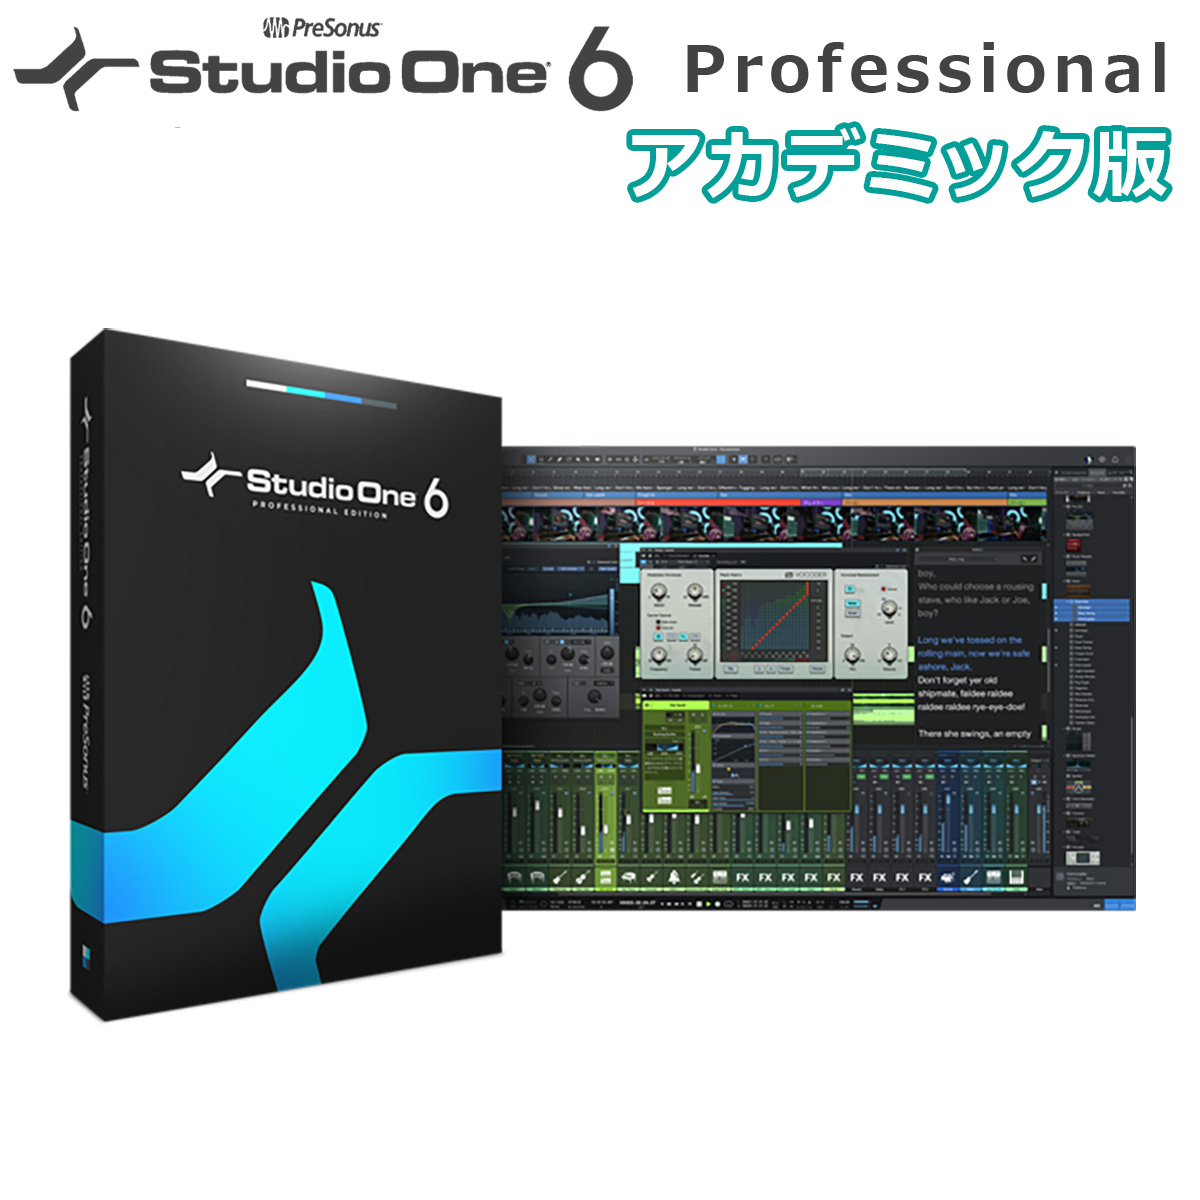 Studio One 5 Professional